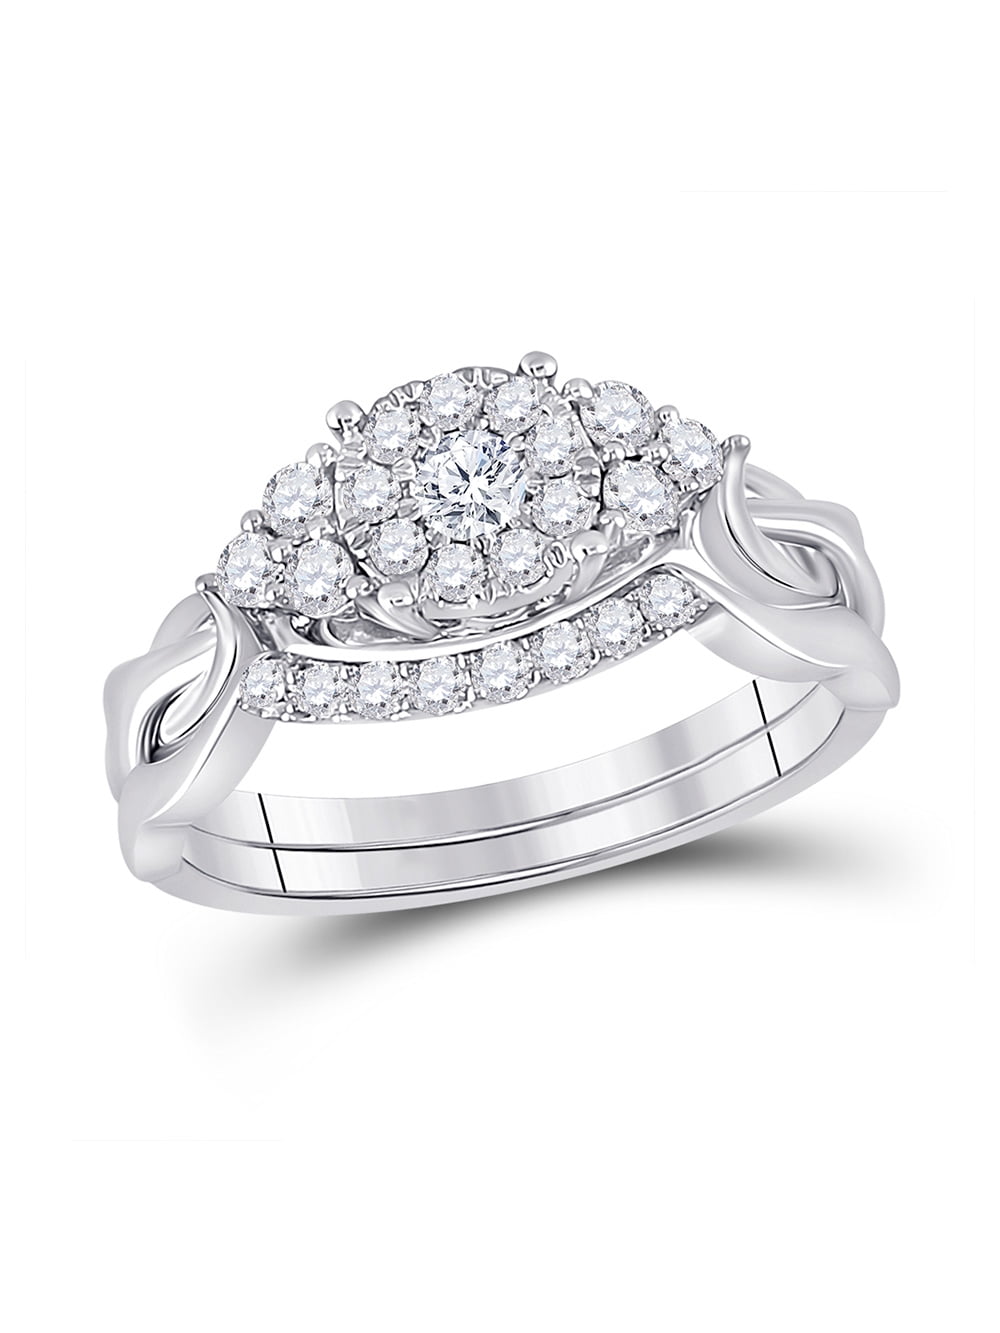 Details about   Round Cut D/VVS1 Diamond Engagement Wedding Rings Sets Bridal White Gold Finish 